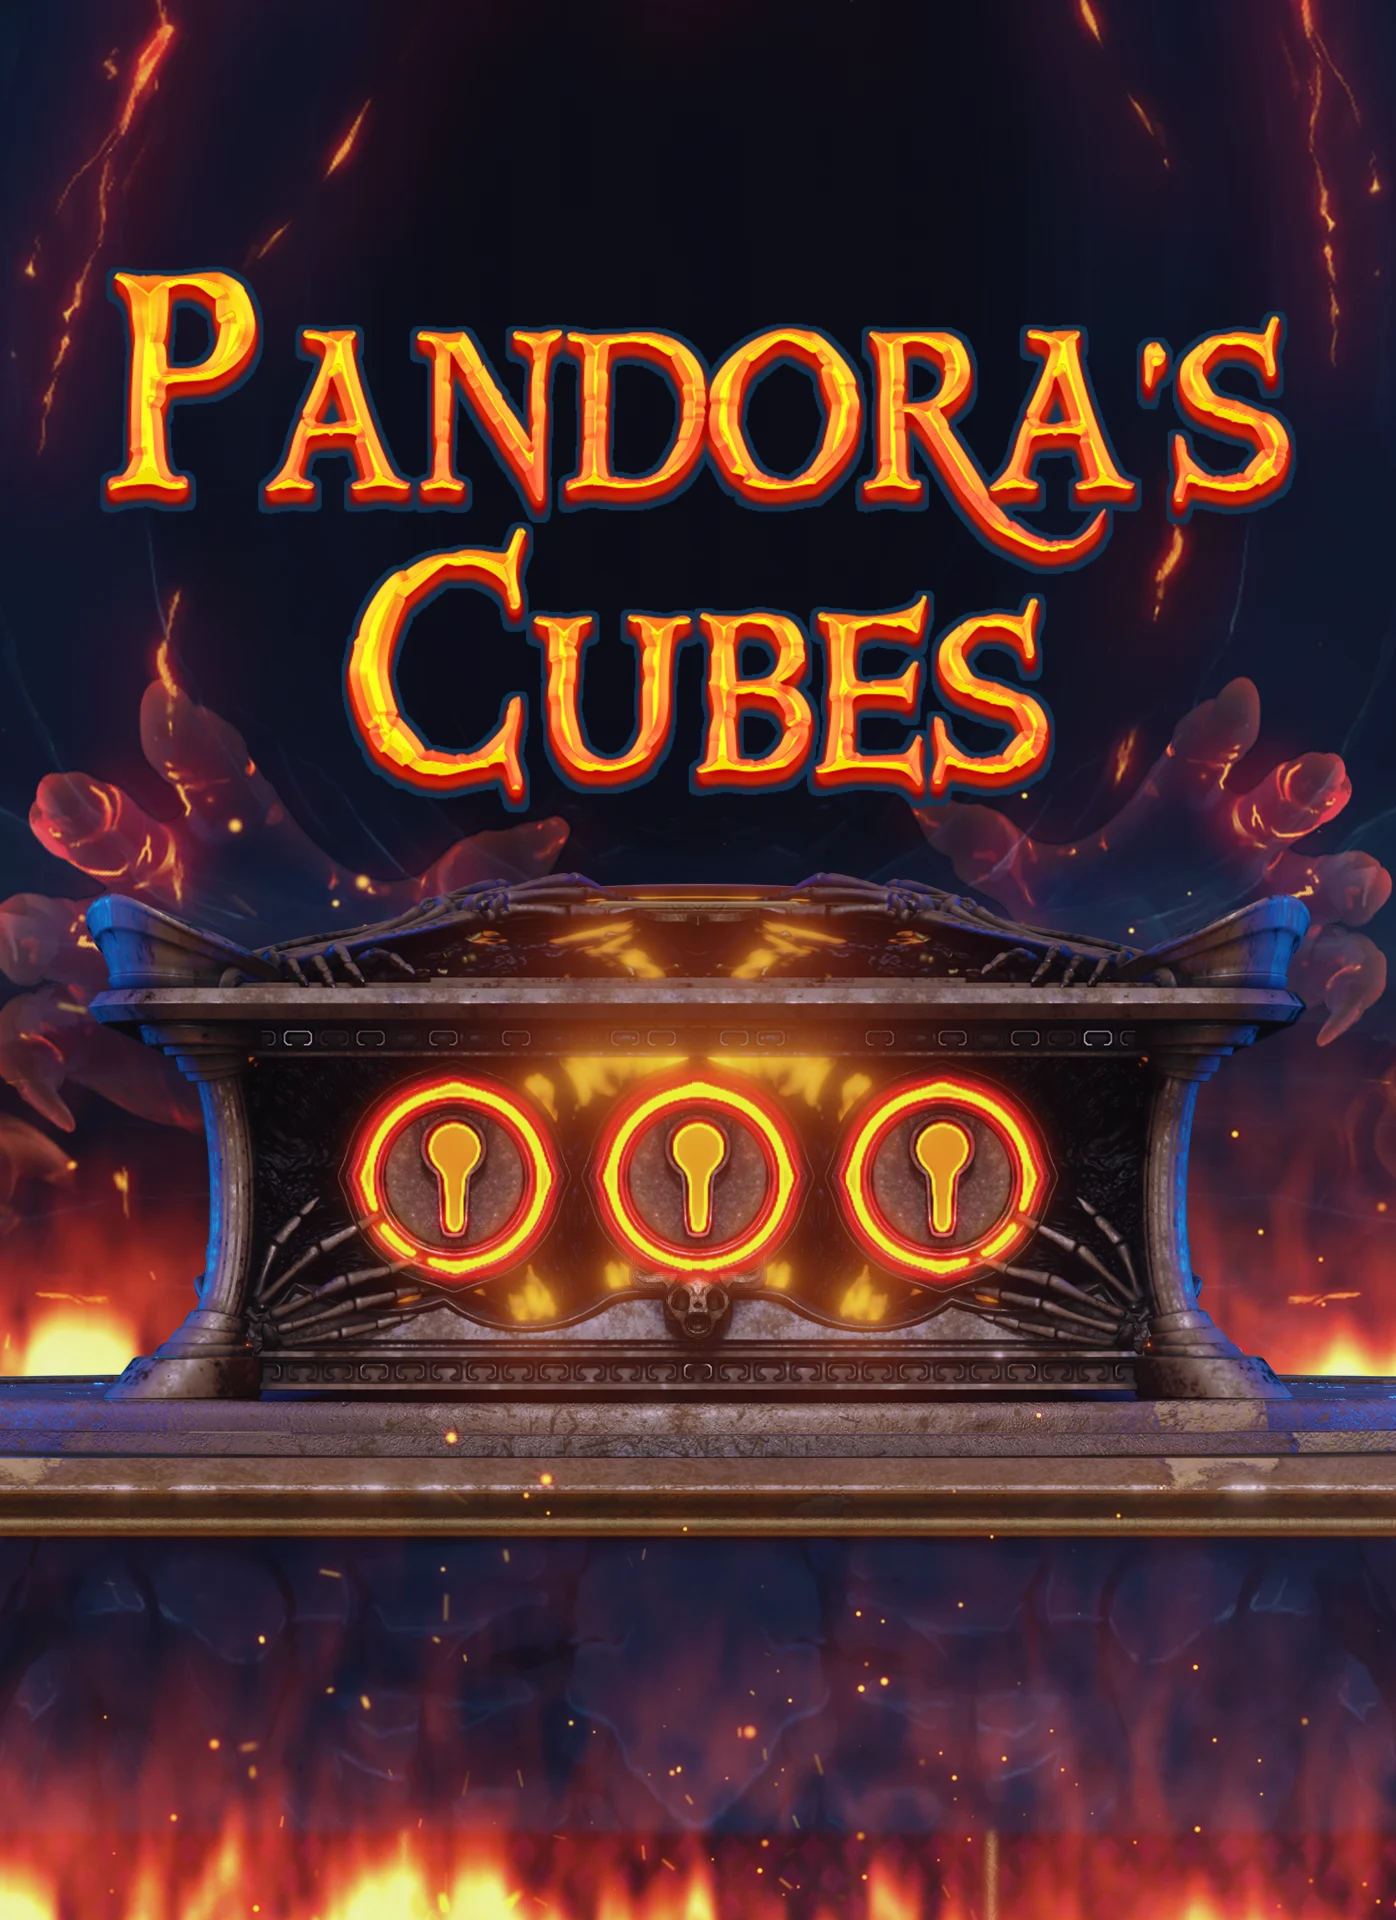 Play Pandora's Cubes on Starcasinodice online casino